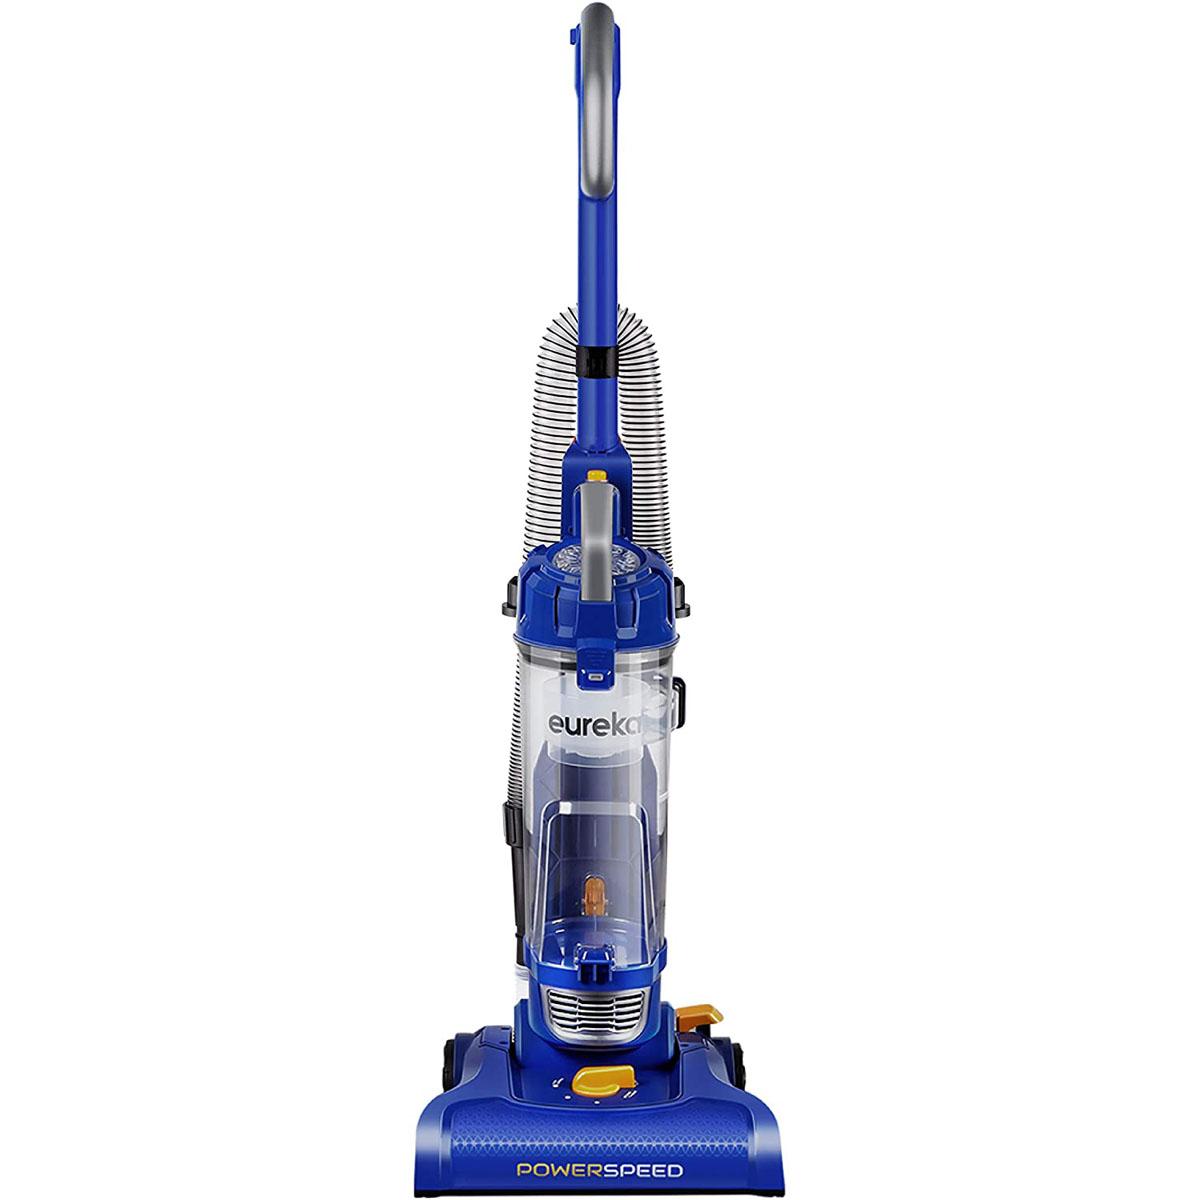 Eureka NEU182A PowerSpeed Bagless Upright Vacuum Cleaner for $44.99 Shipped